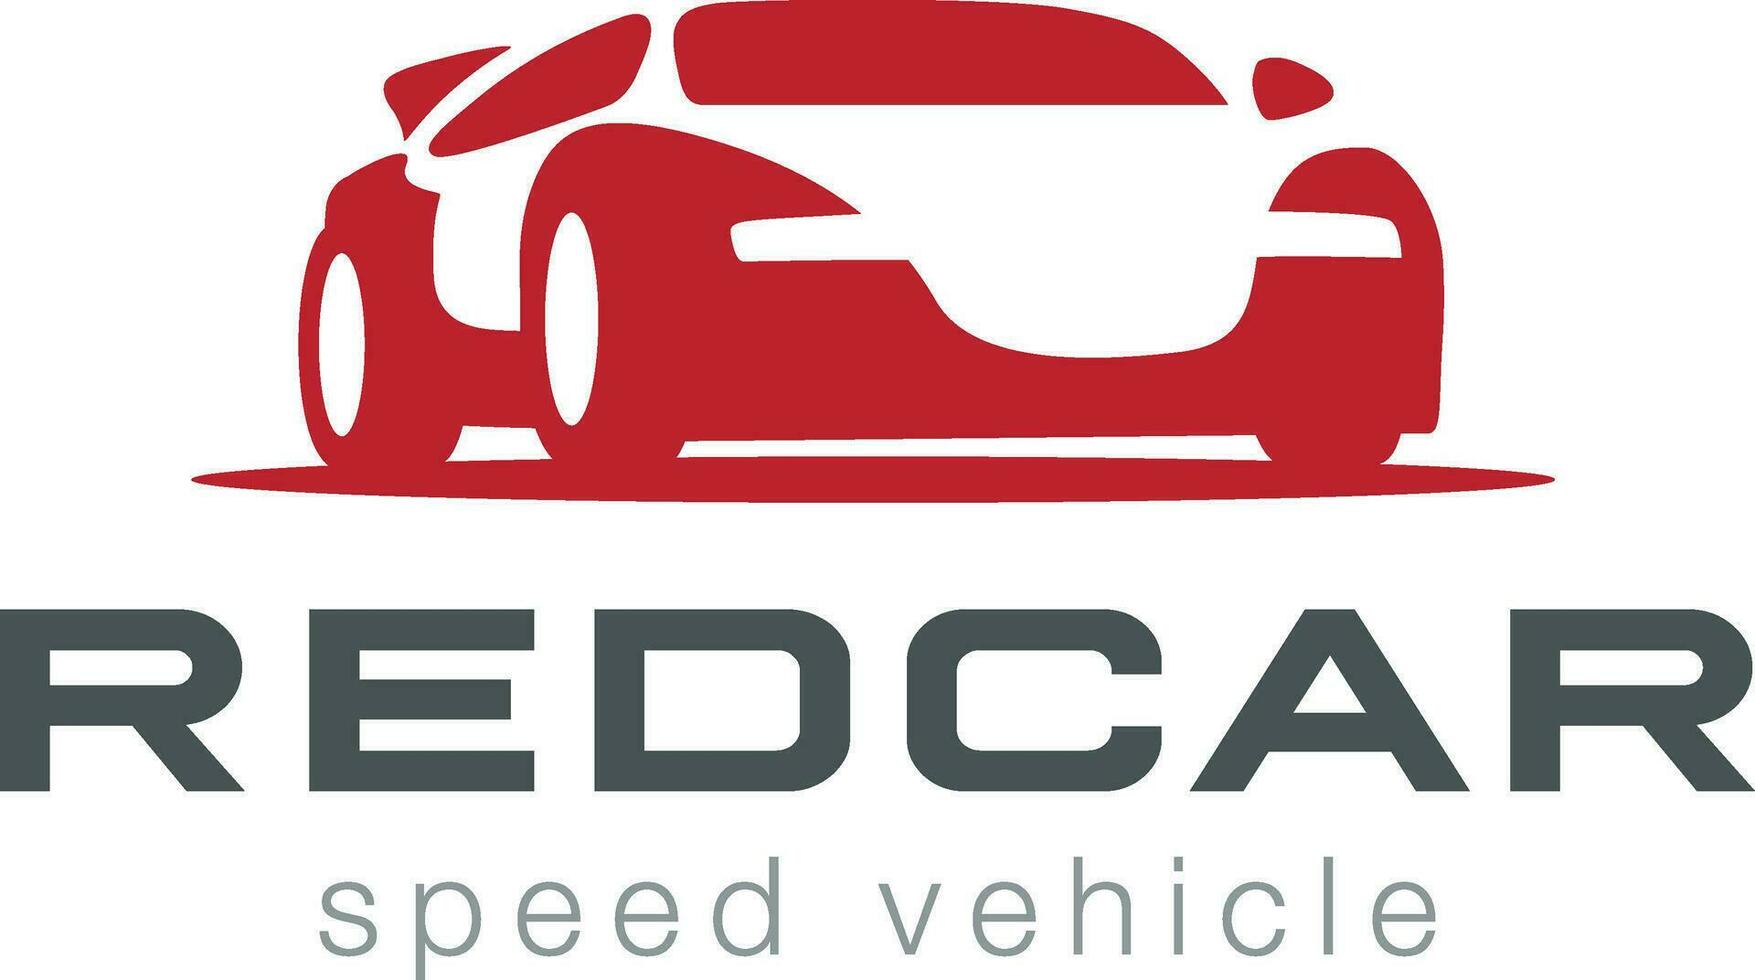 Car logo and illustration fully editable file vector